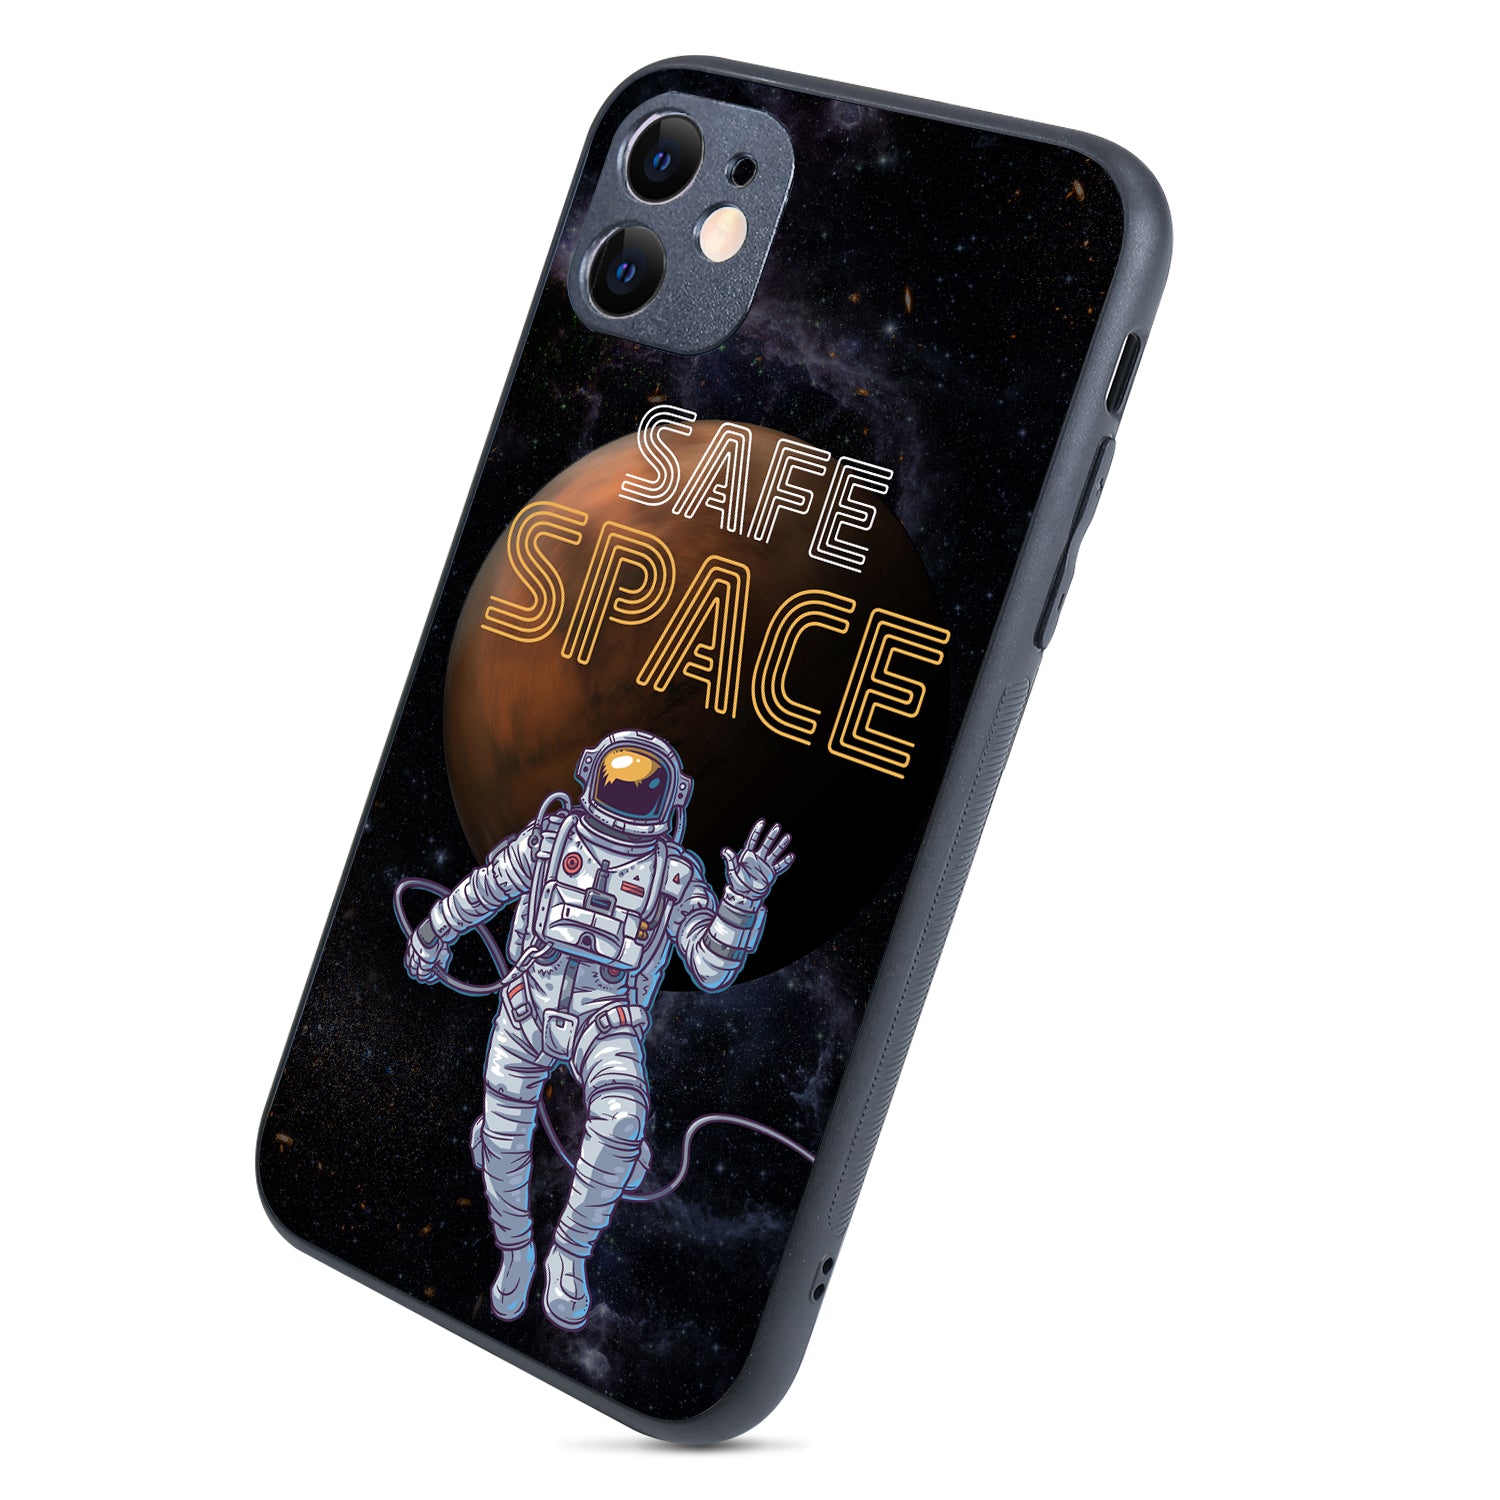 Safe Space iPhone 11 Case